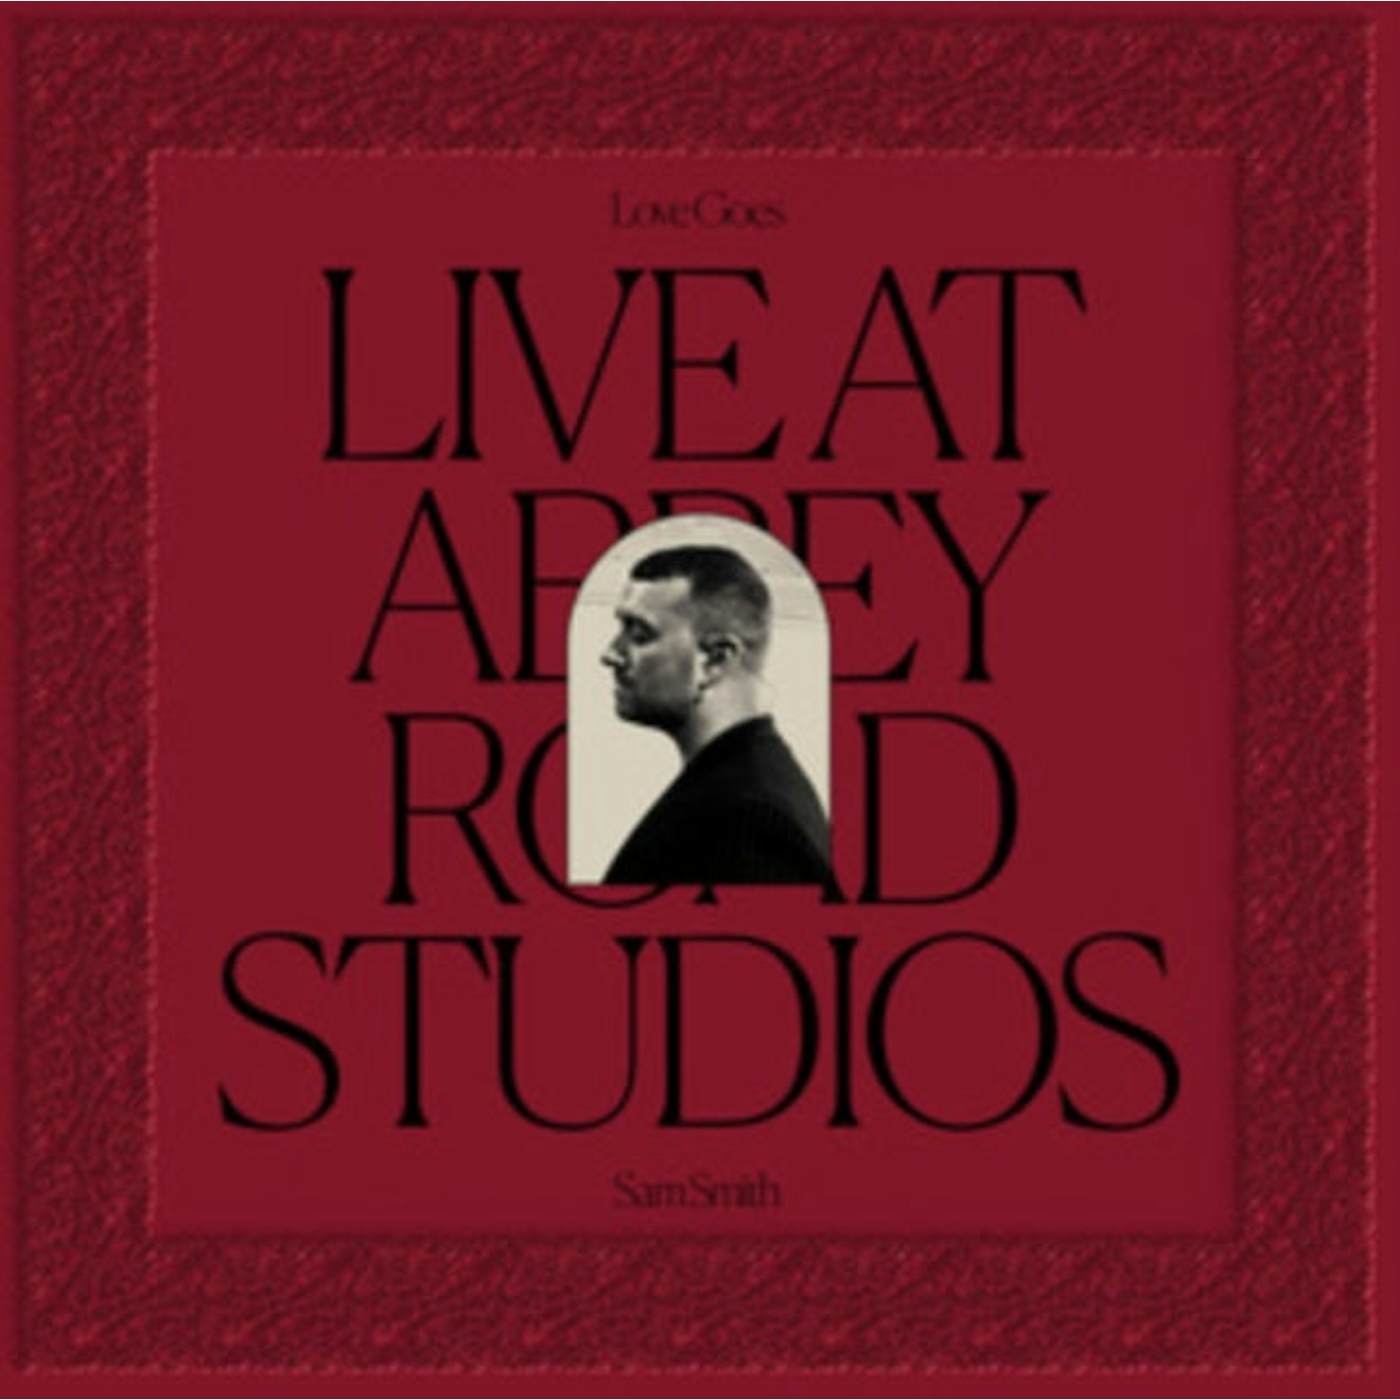 Sam Smith LP Vinyl Record - Love Goes: Live At Abbey Road Studios